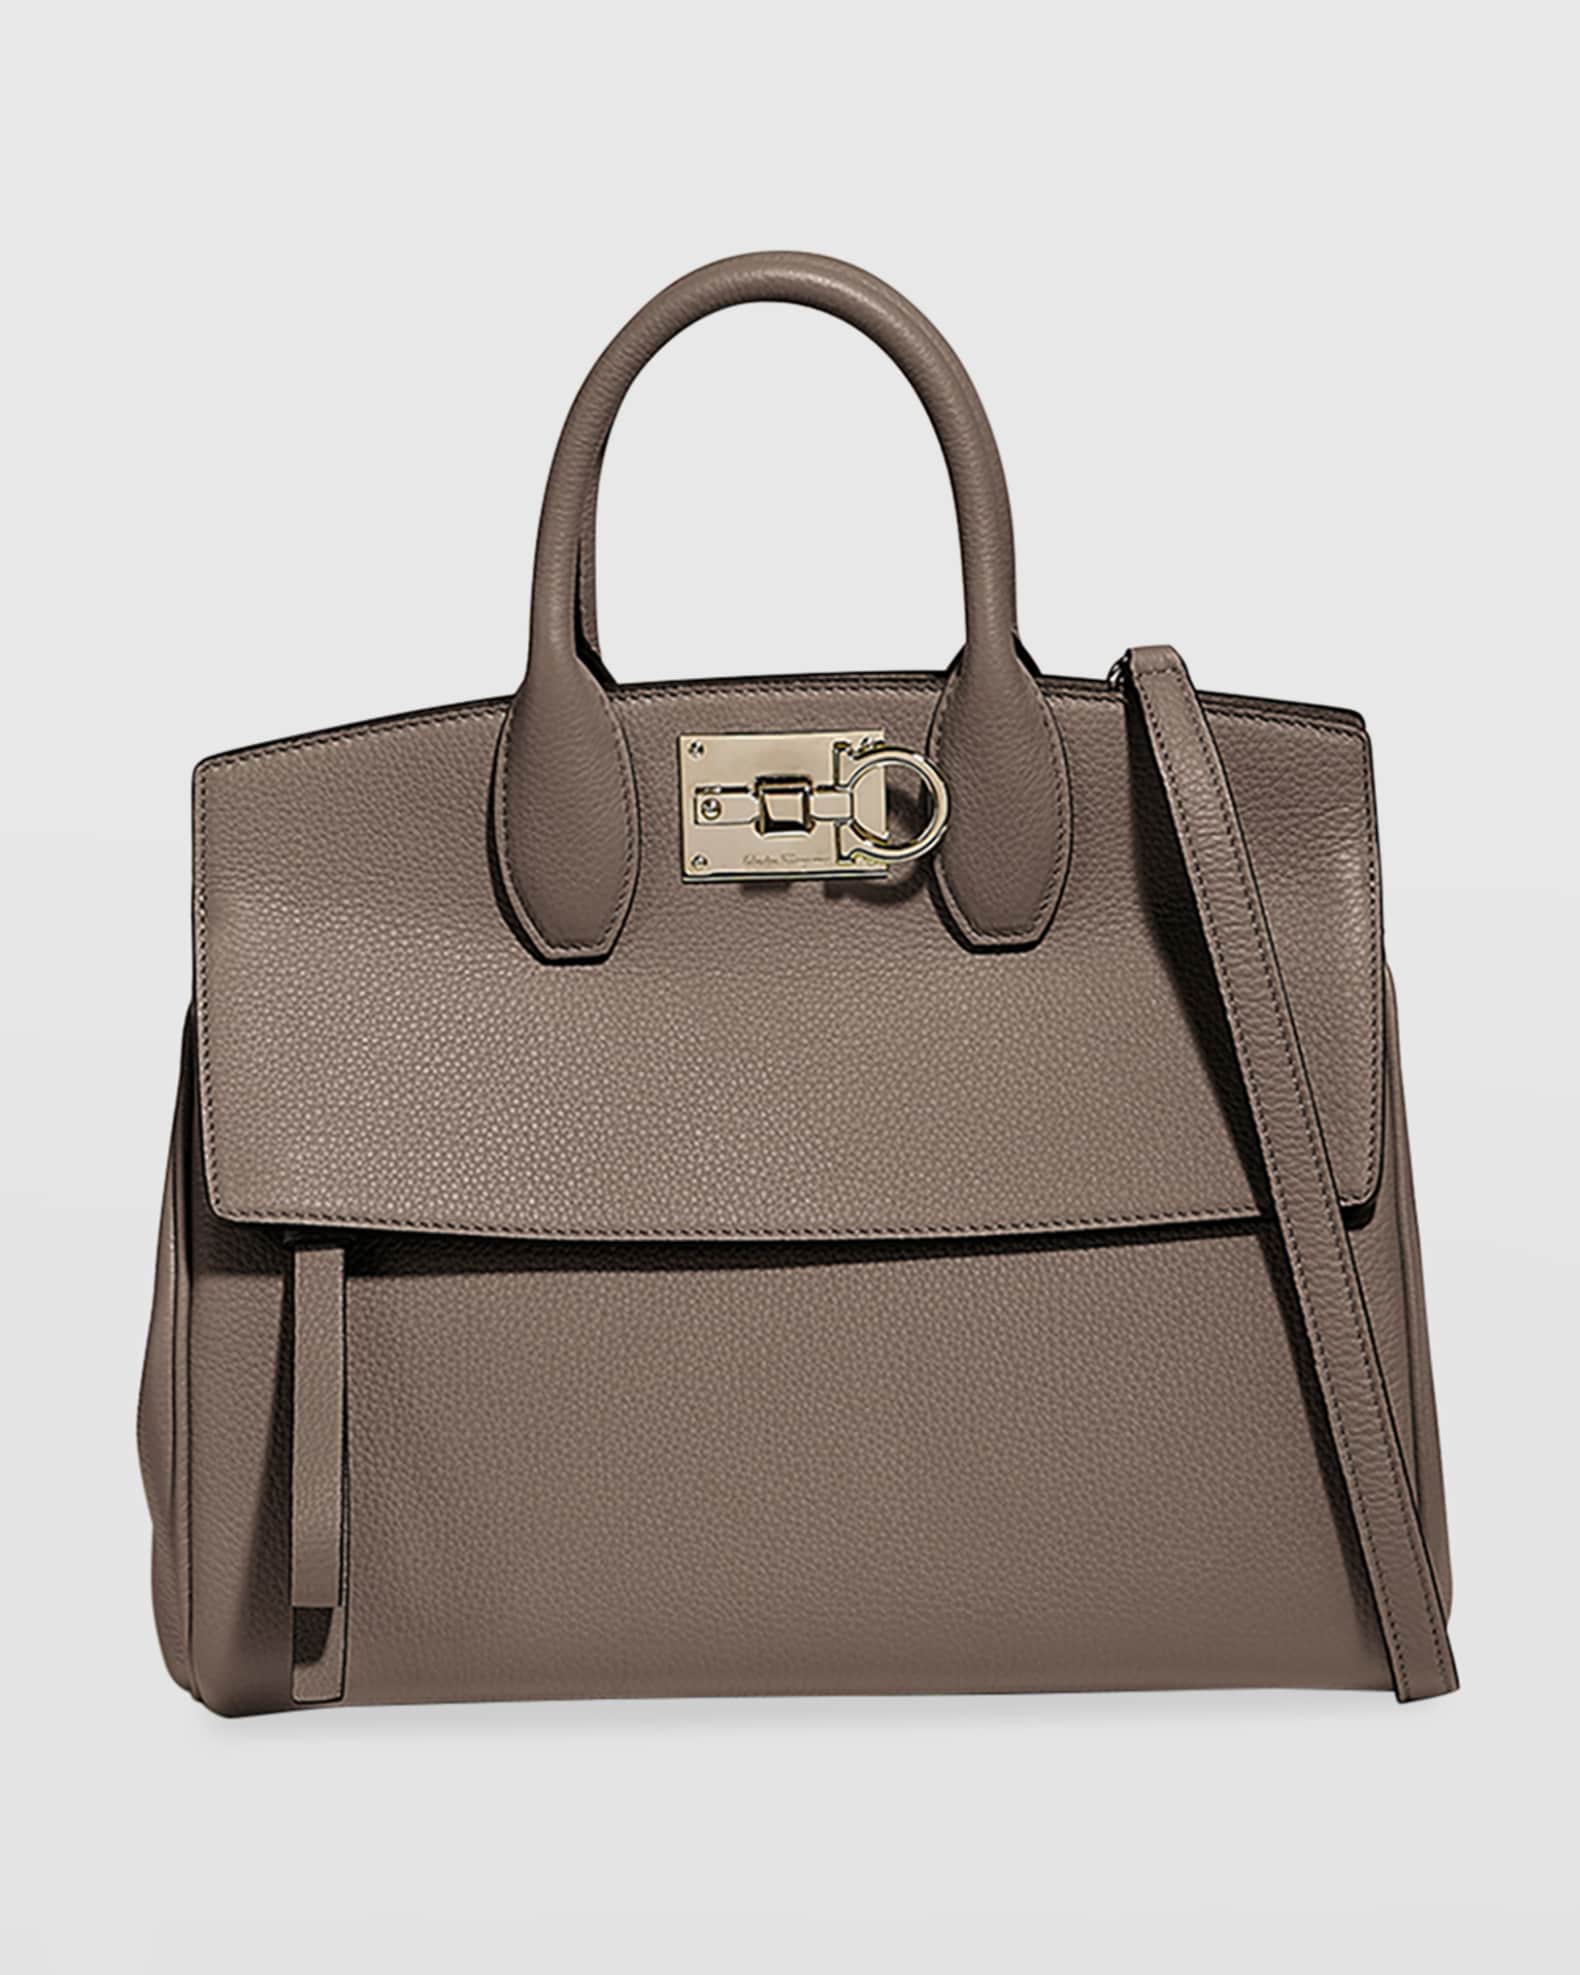 Ferragamo Studio Bag Small Leather Satchel | Neiman Marcus